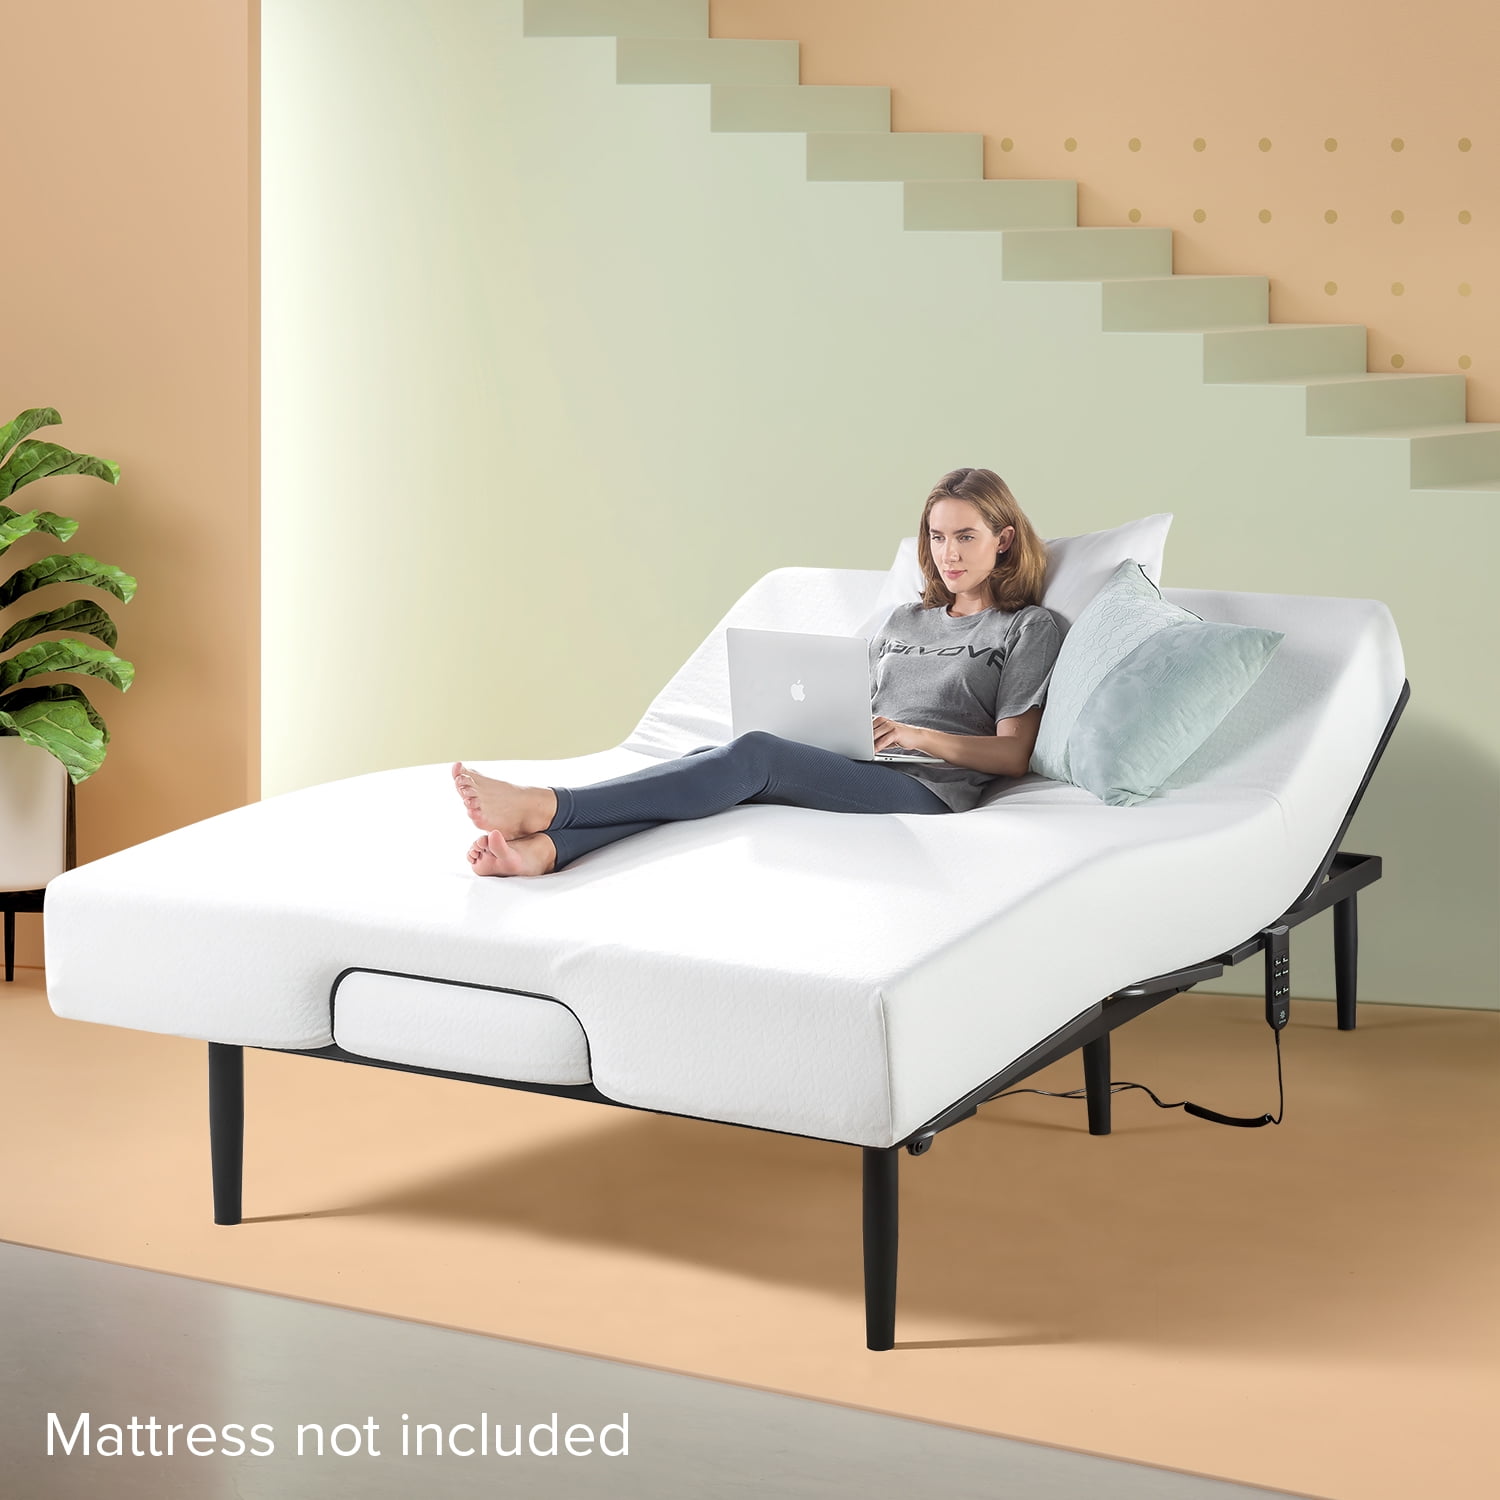 Zinus Jared Adjustable Black Metal Bed, Queen Adjustable Bed Frame With Remote